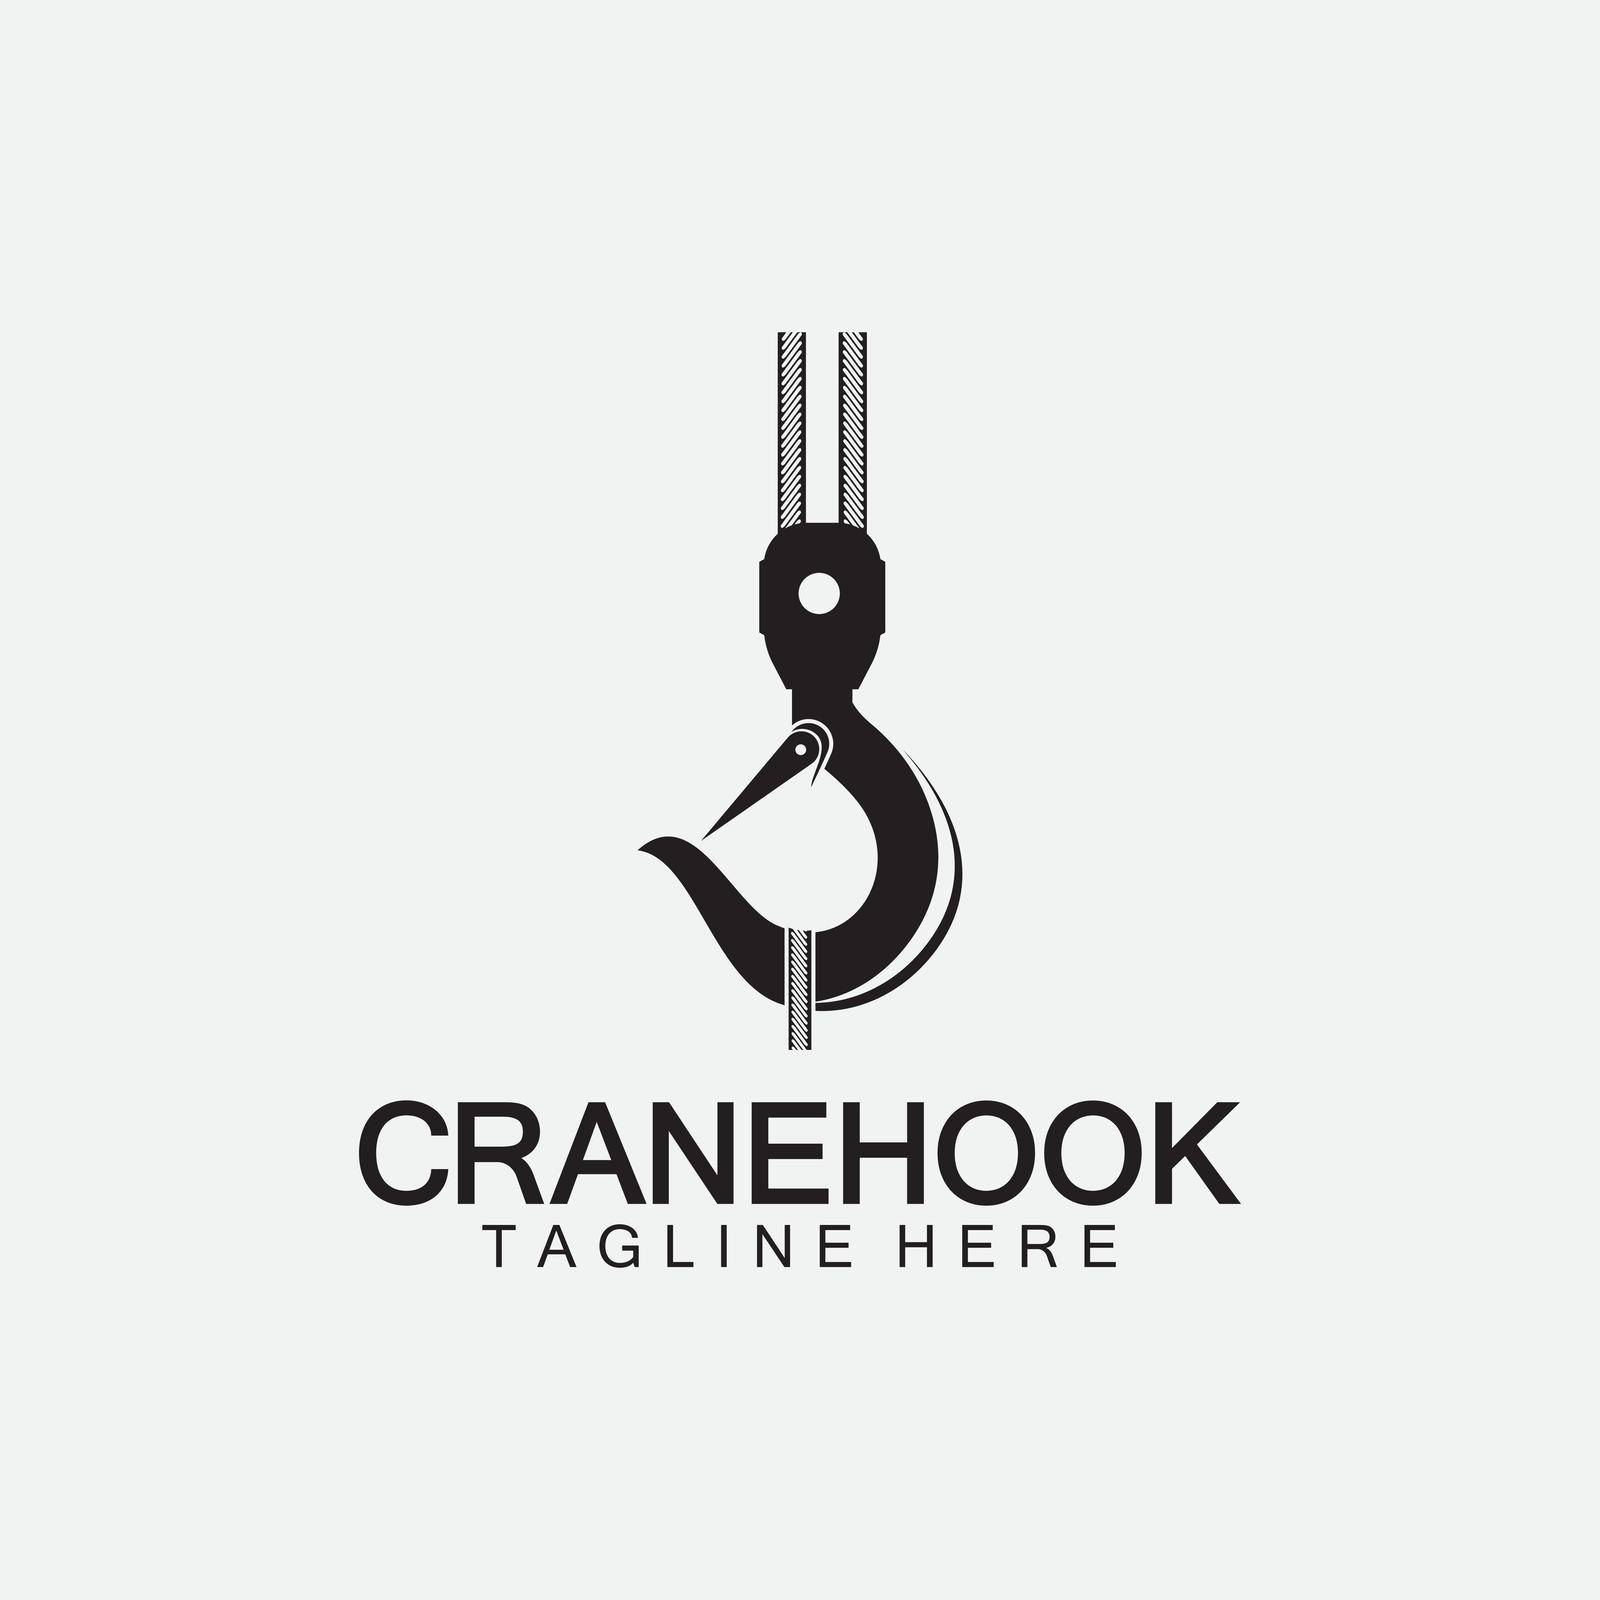 Crane hook logo icon vector illustration design  template